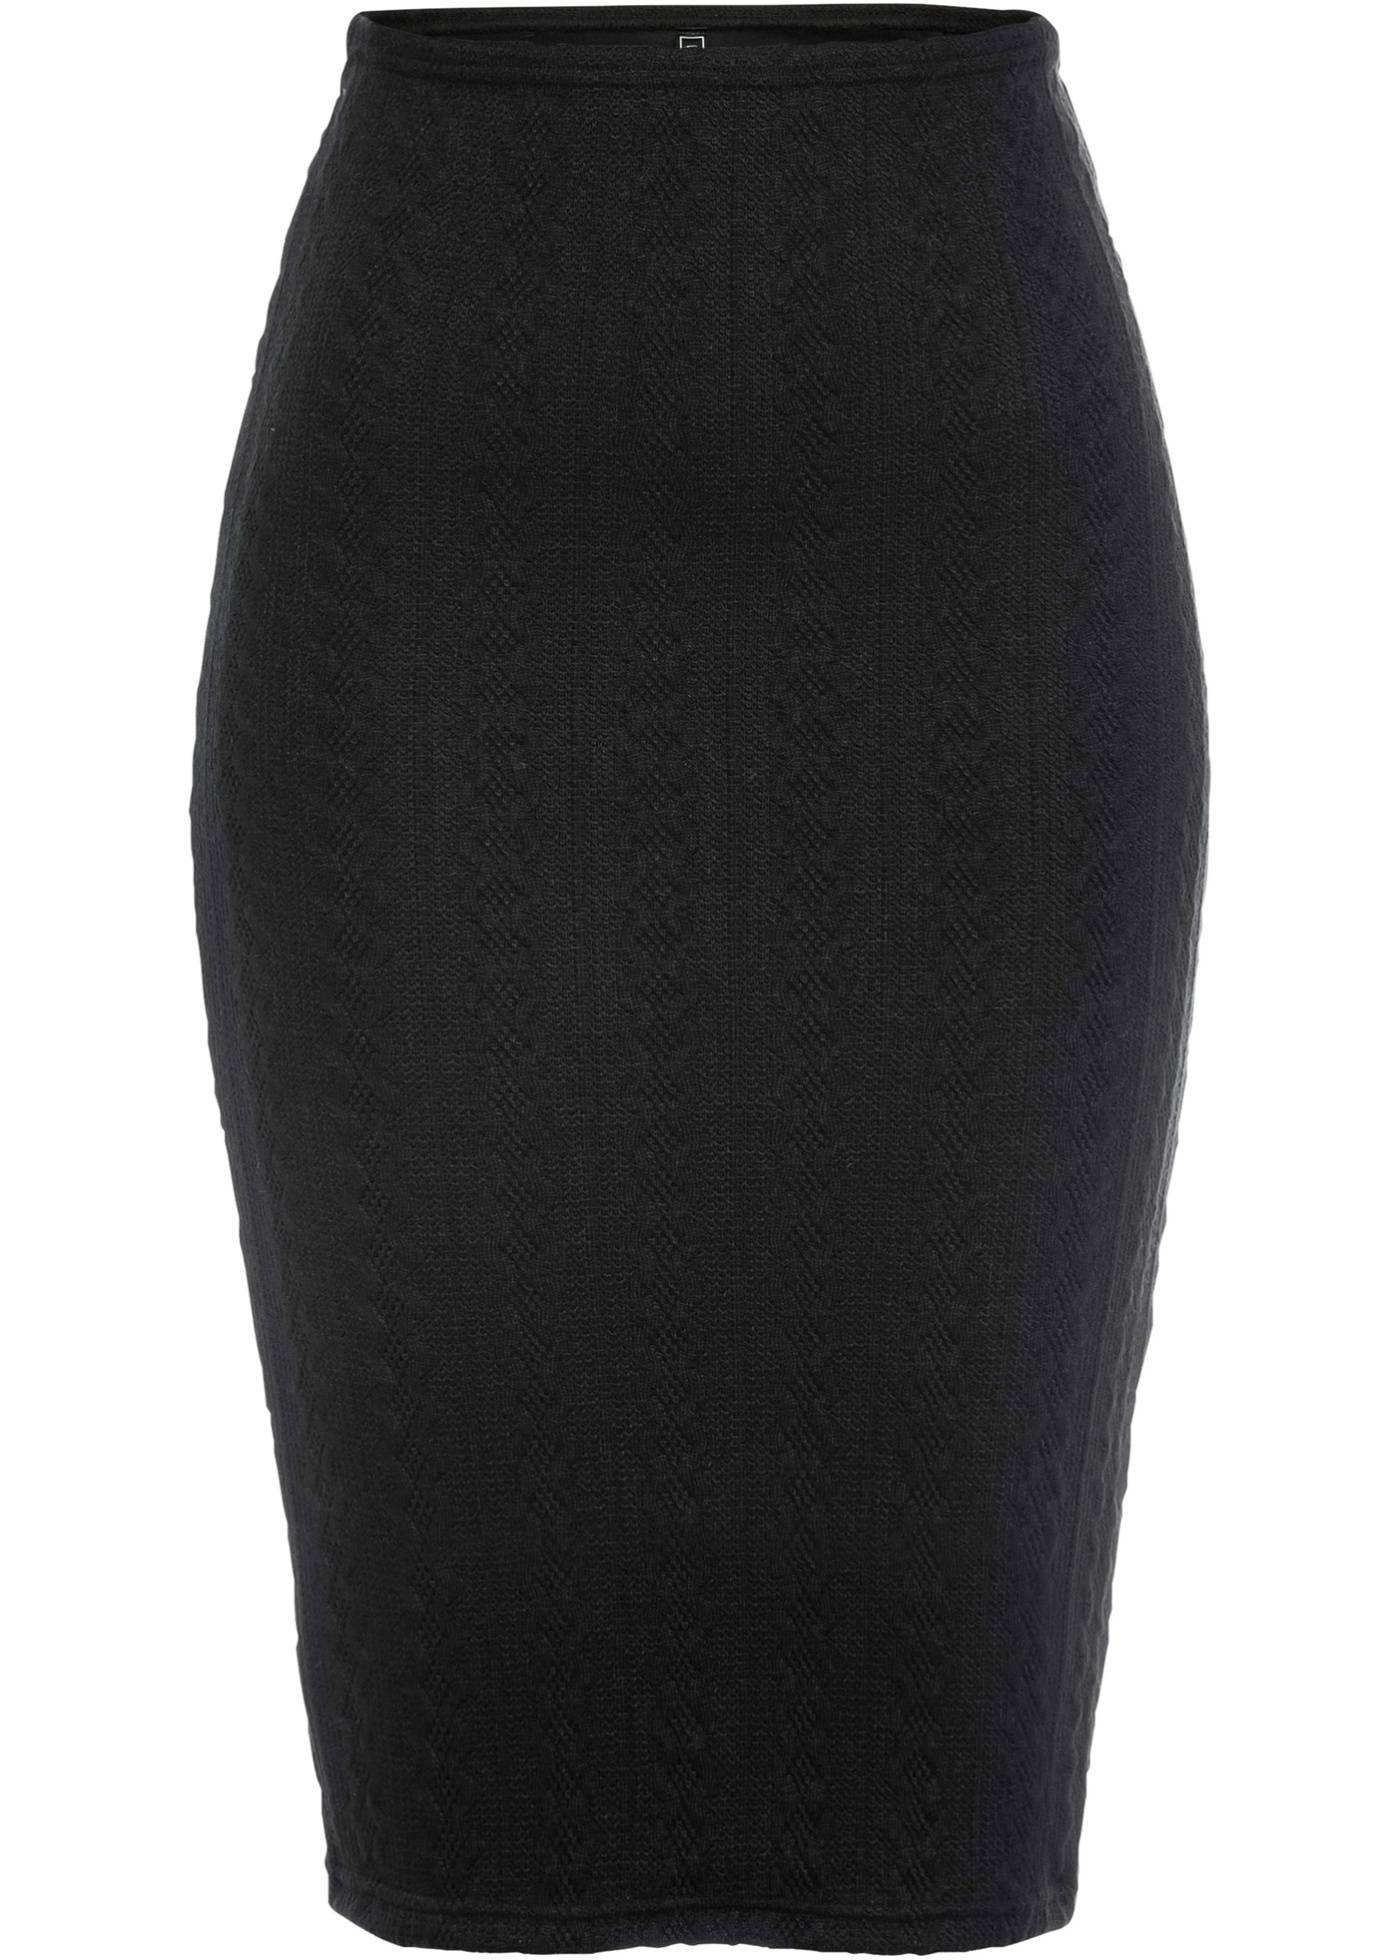 Вязаная юбка черная